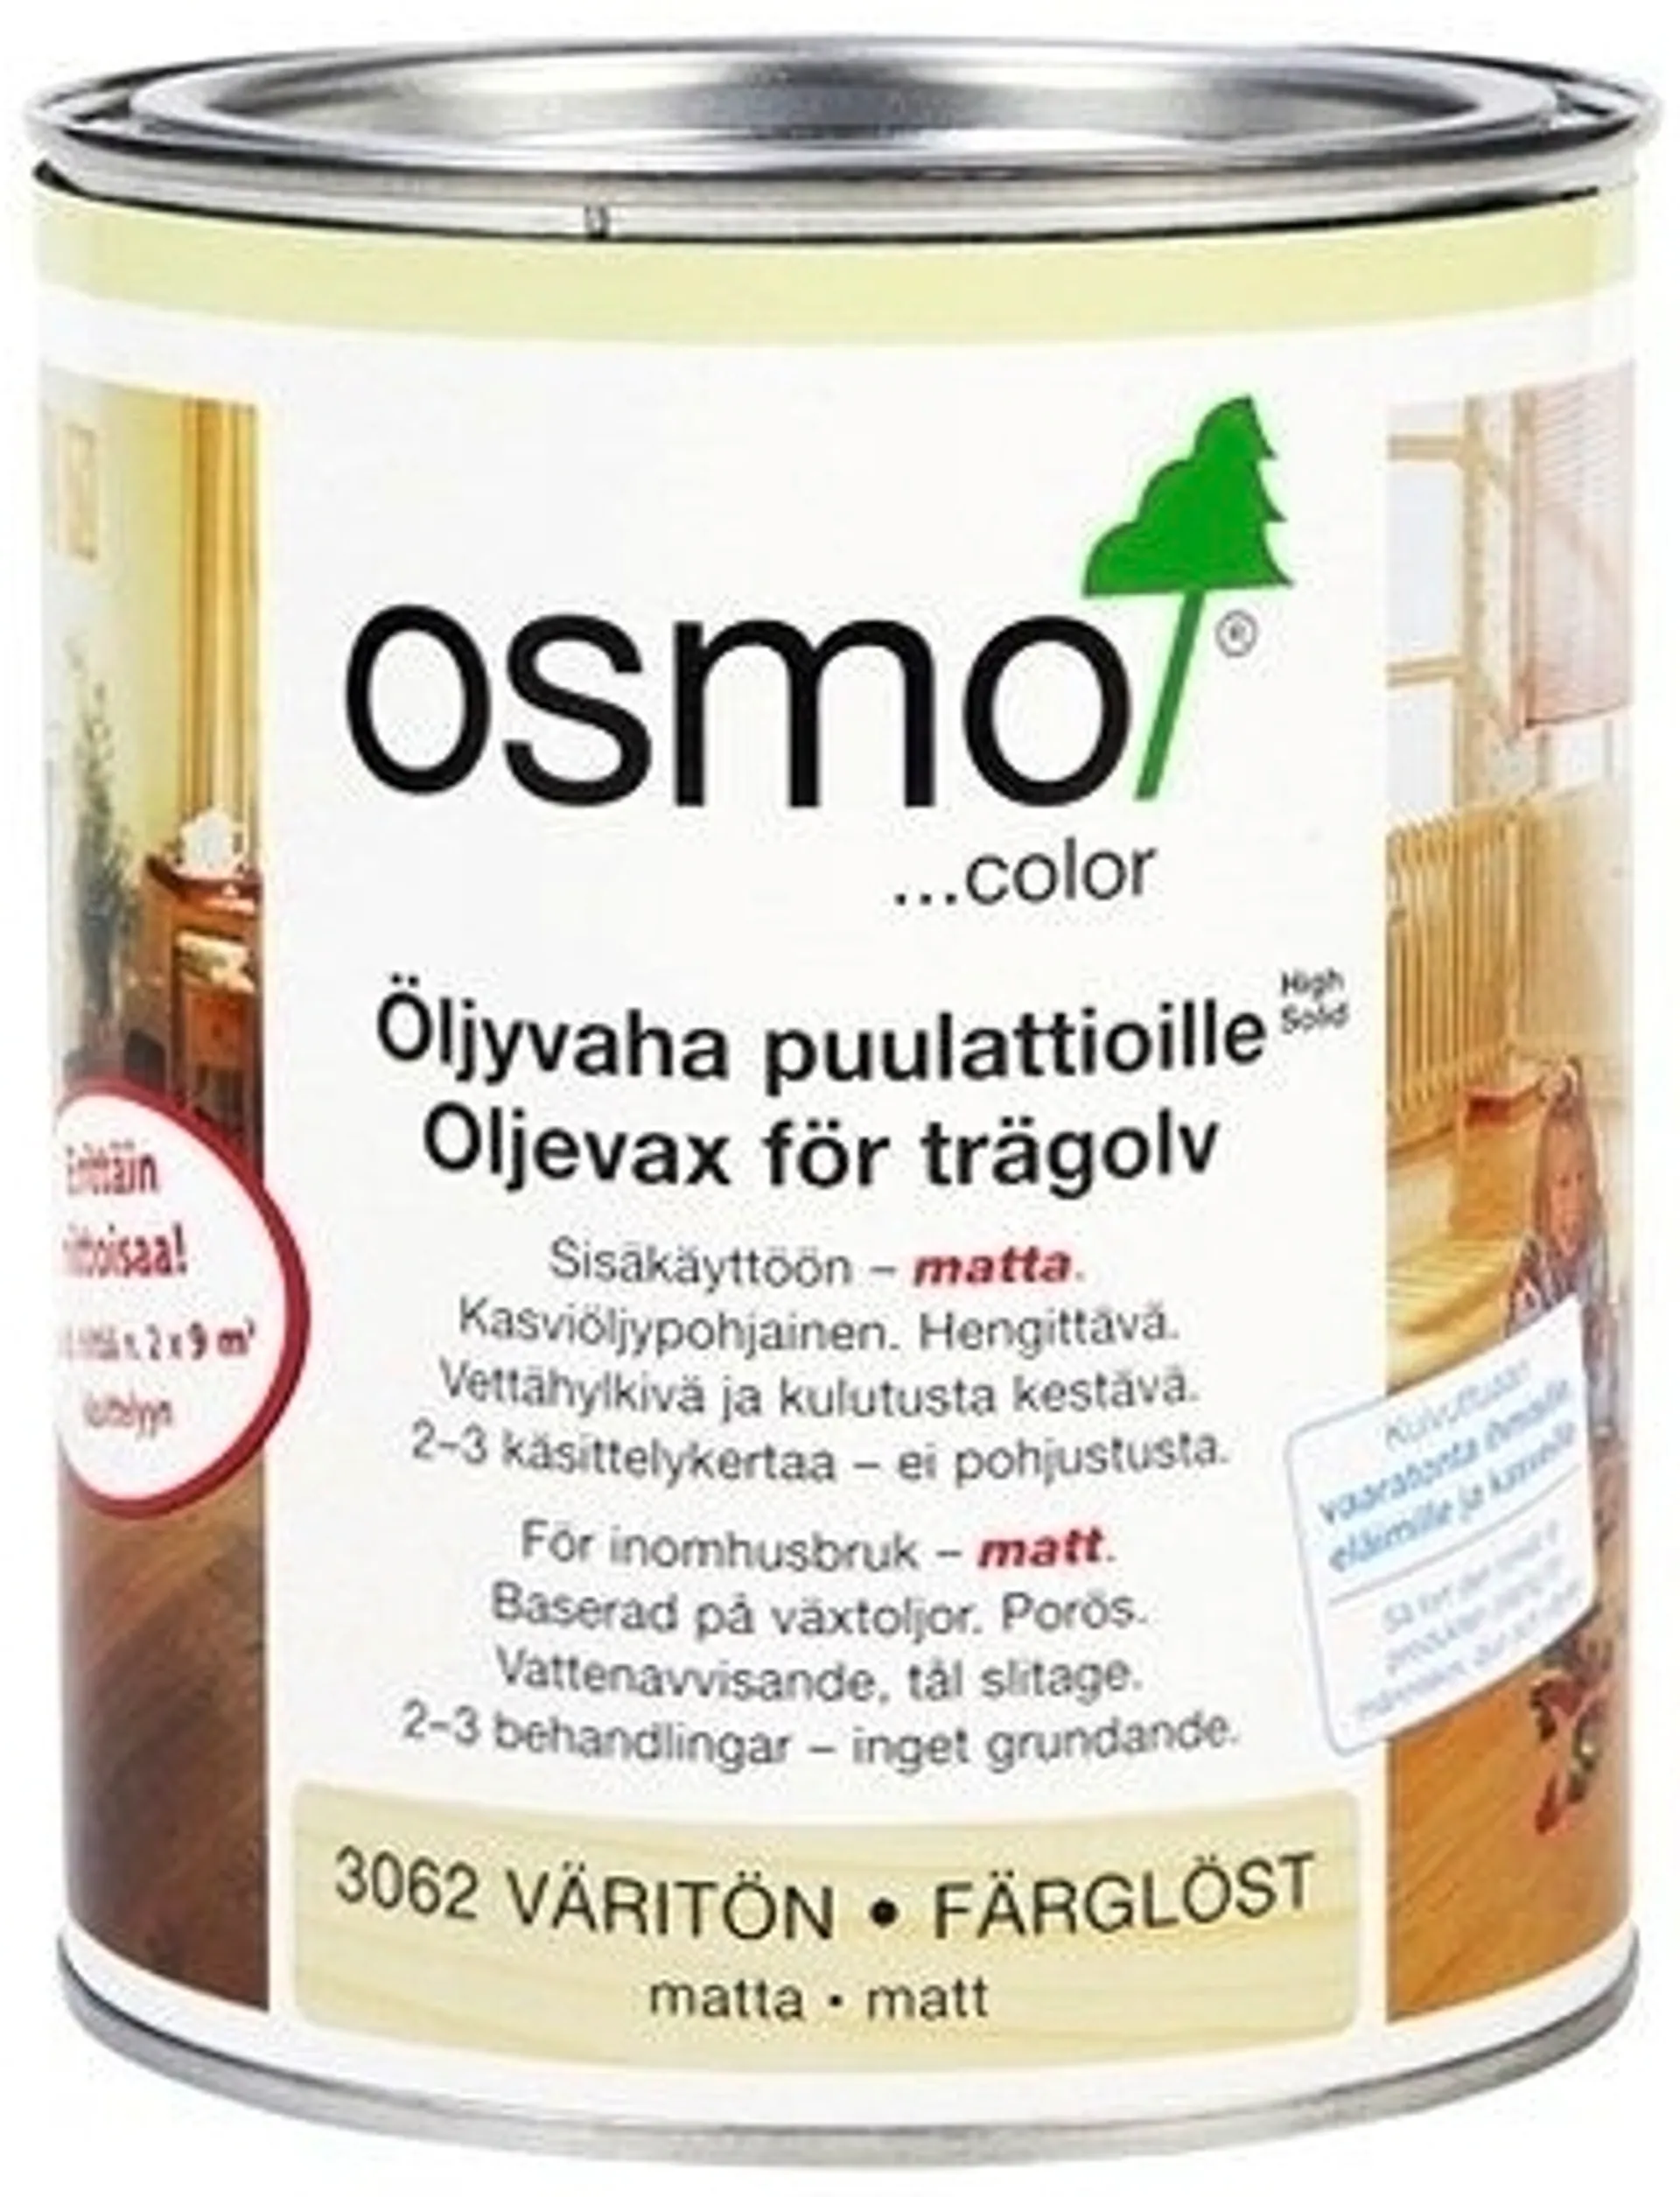 Osmo Color 750ml öljyvaha 3062 väritön matta